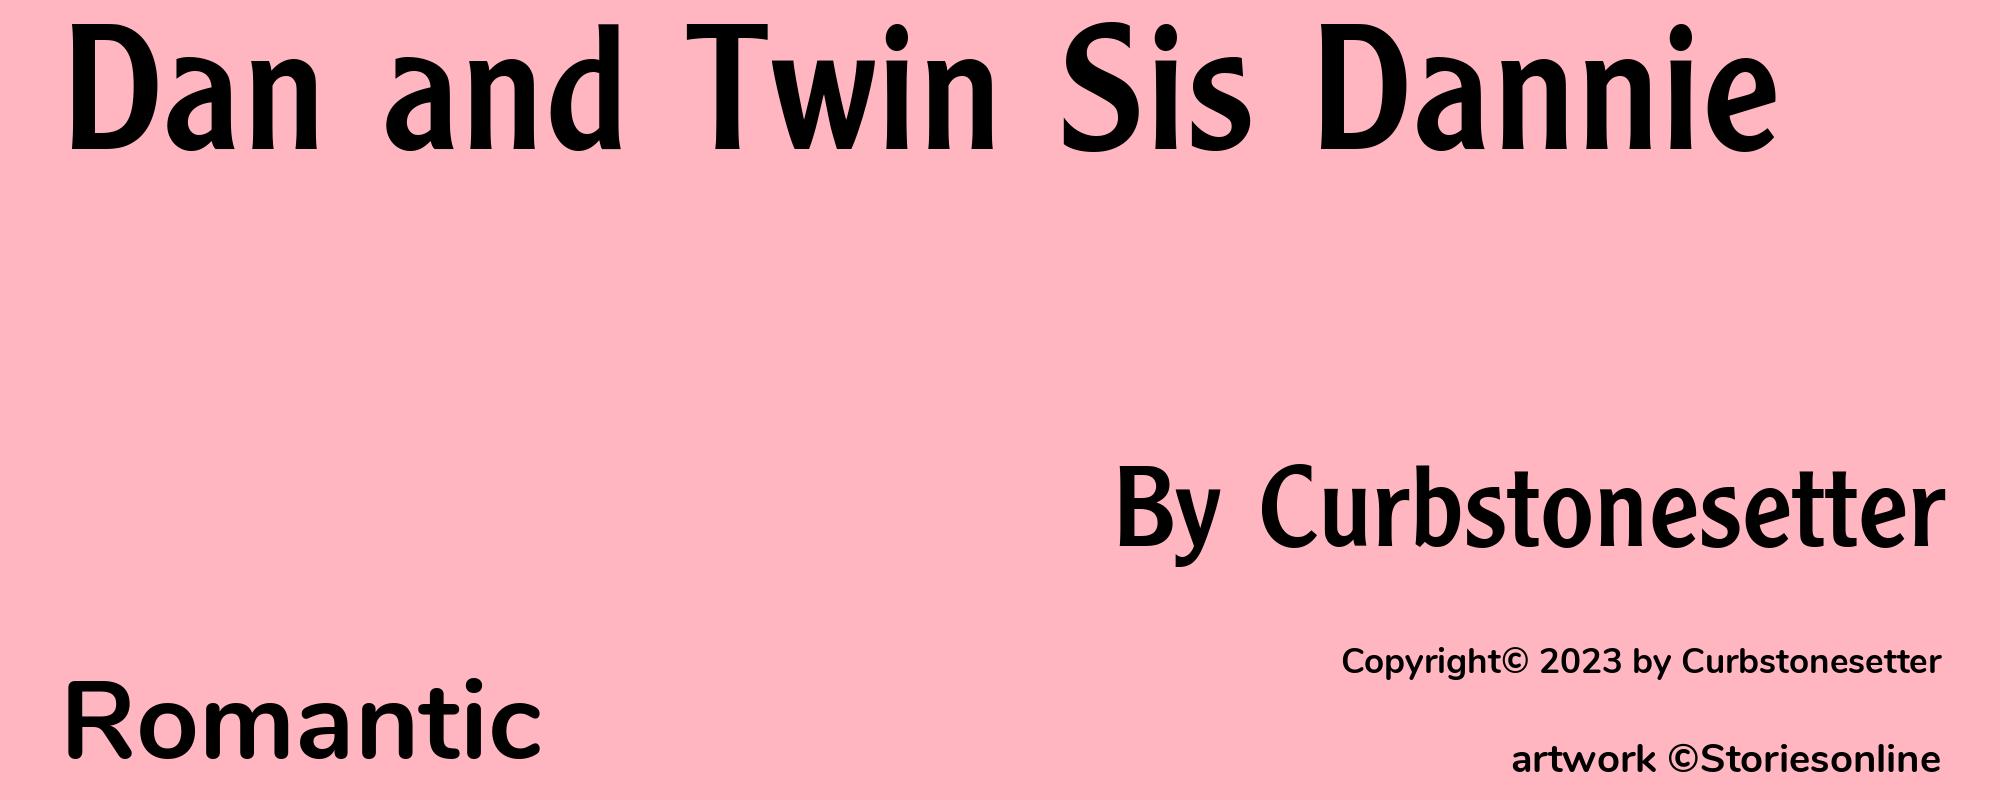 Dan and Twin Sis Dannie - Cover